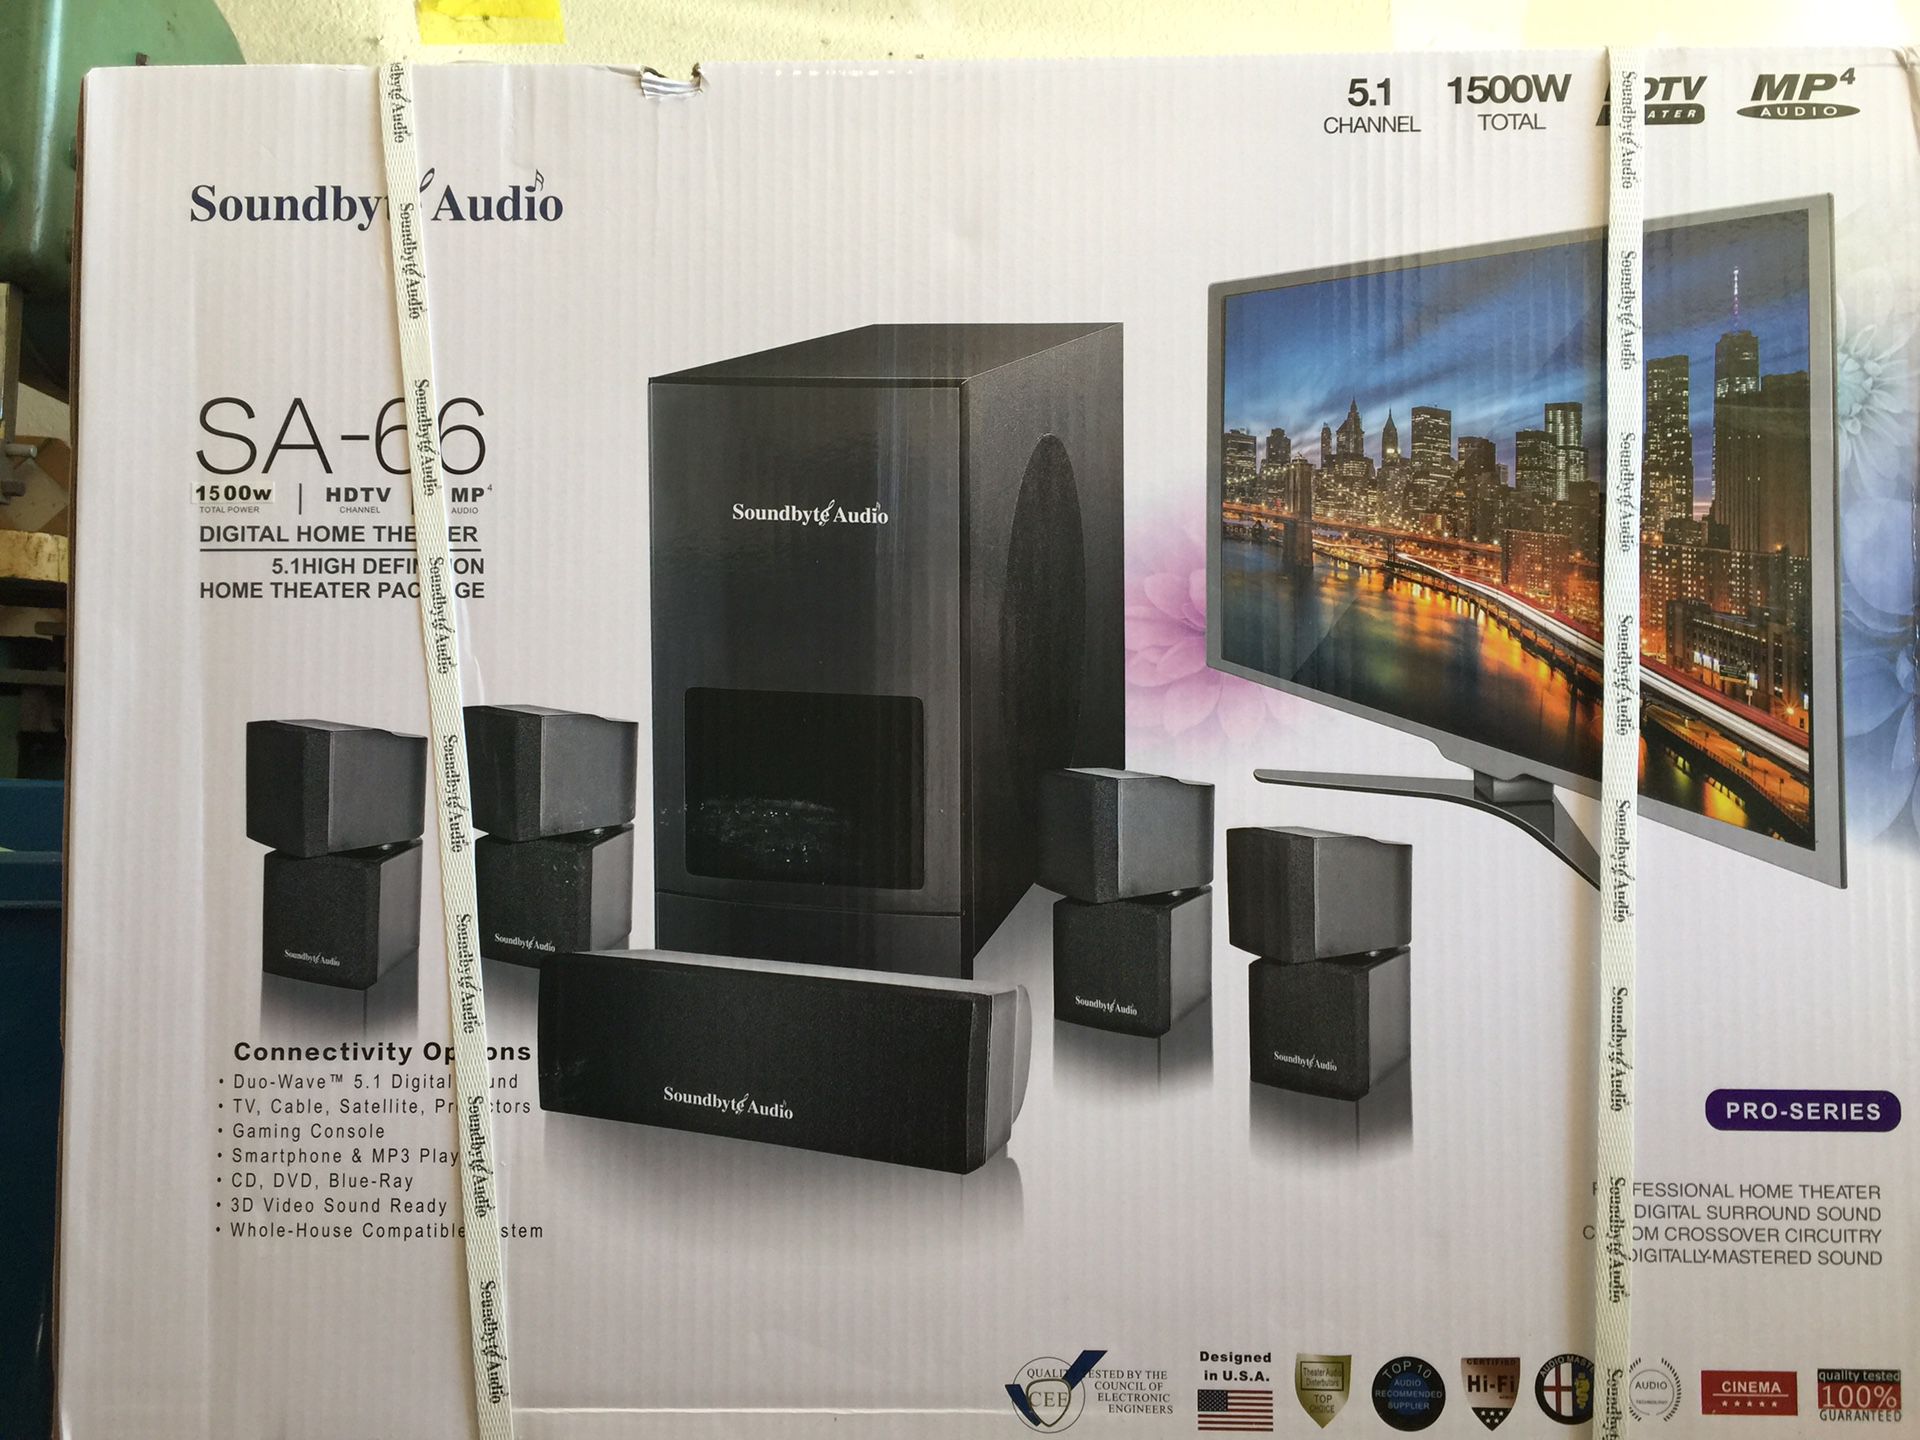 Bluetooth home theater system, Soundbyte Audio SA-66 pro series